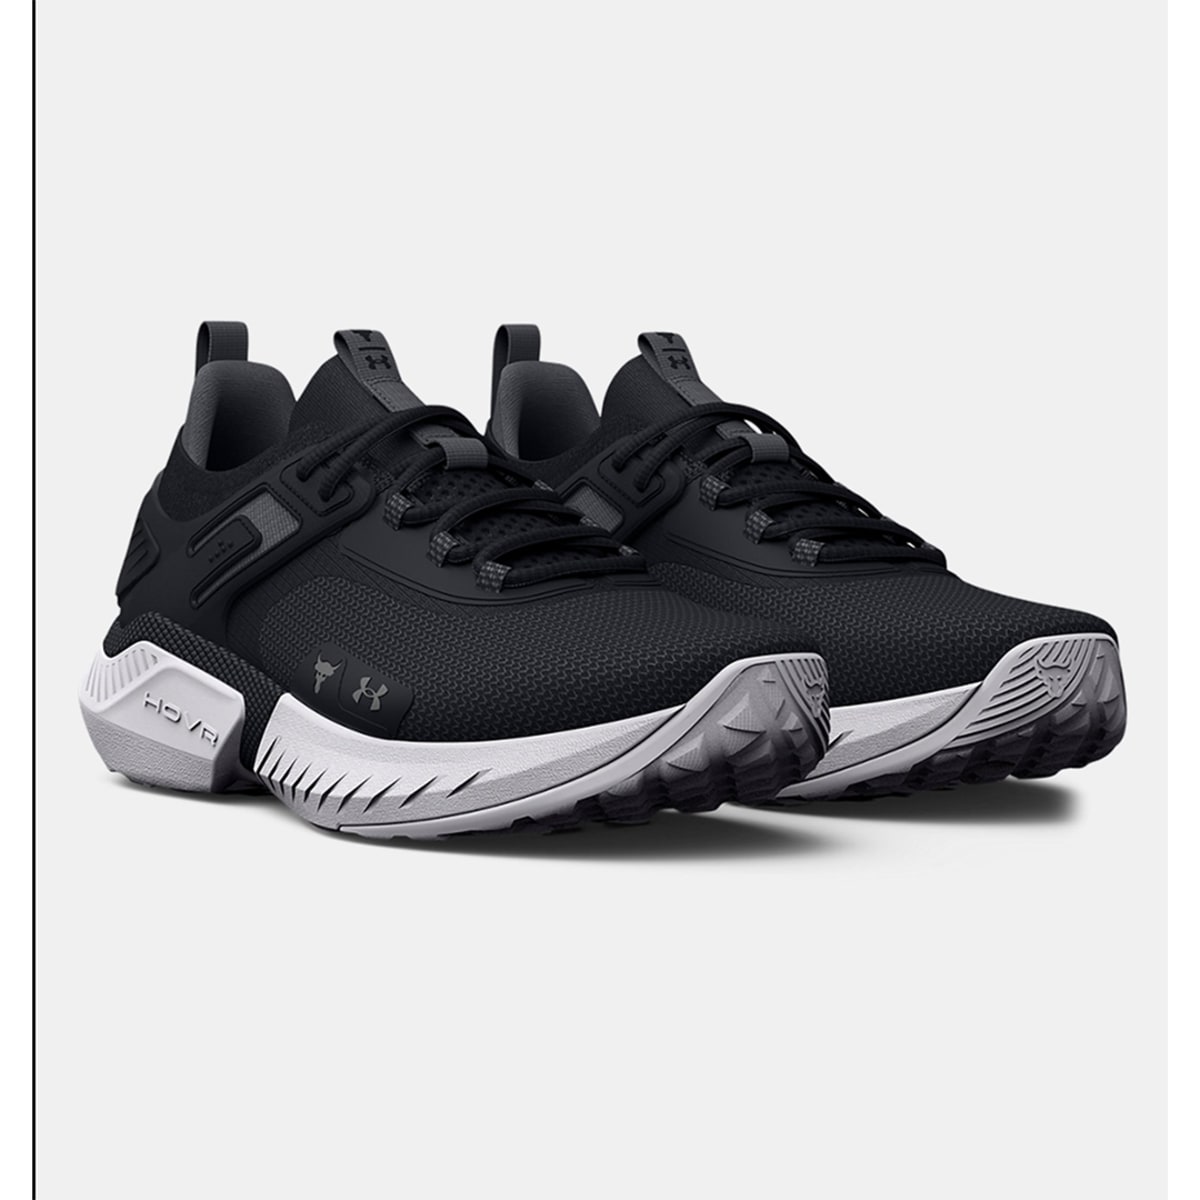 Under Armour UA Project Rock 5 Men's Training Shoes, Black / White / Pitch  Gray, 25.0 cm